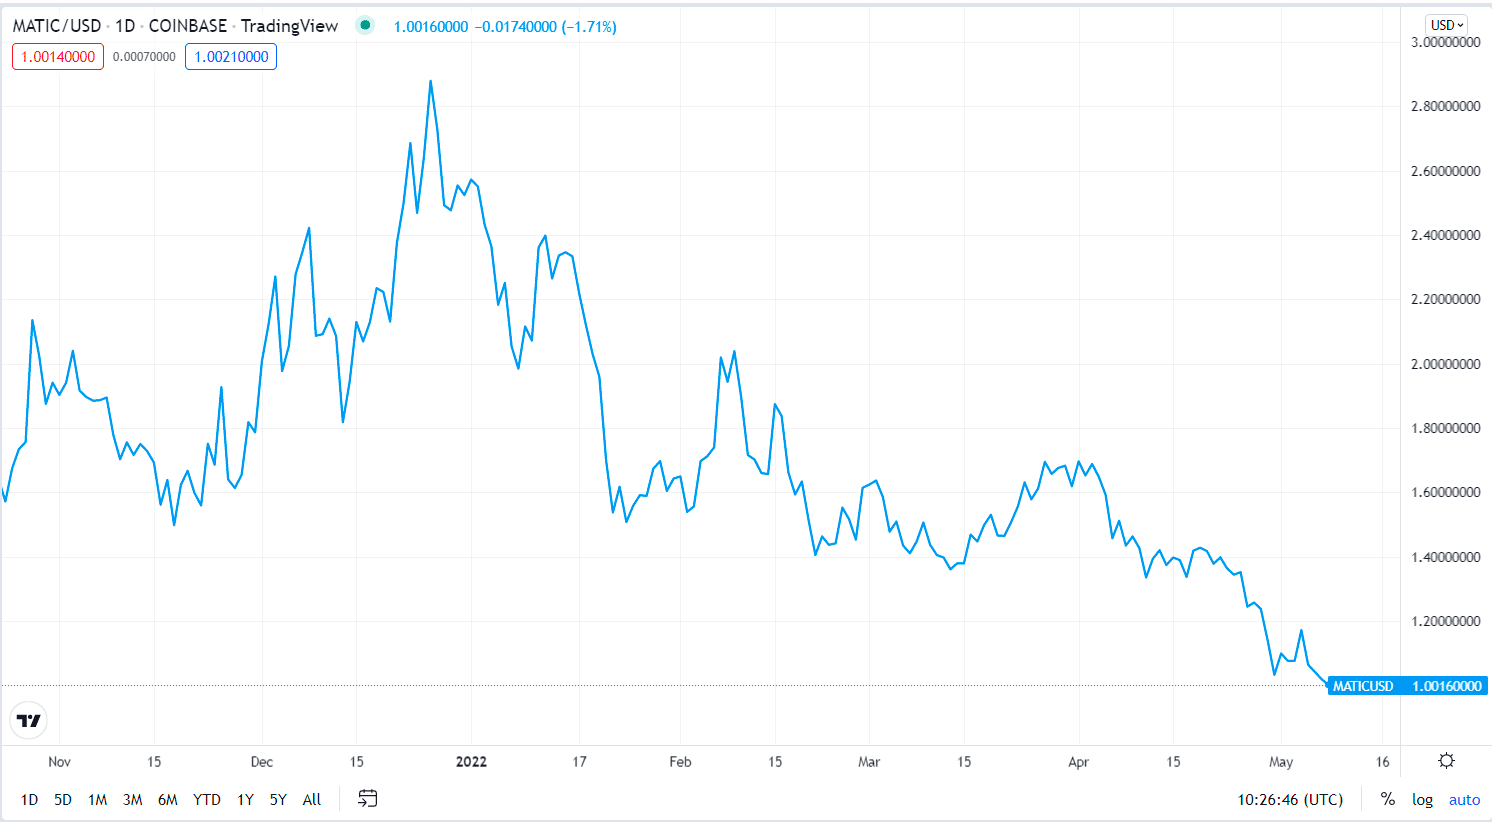 MATIC/USD 1 year price change